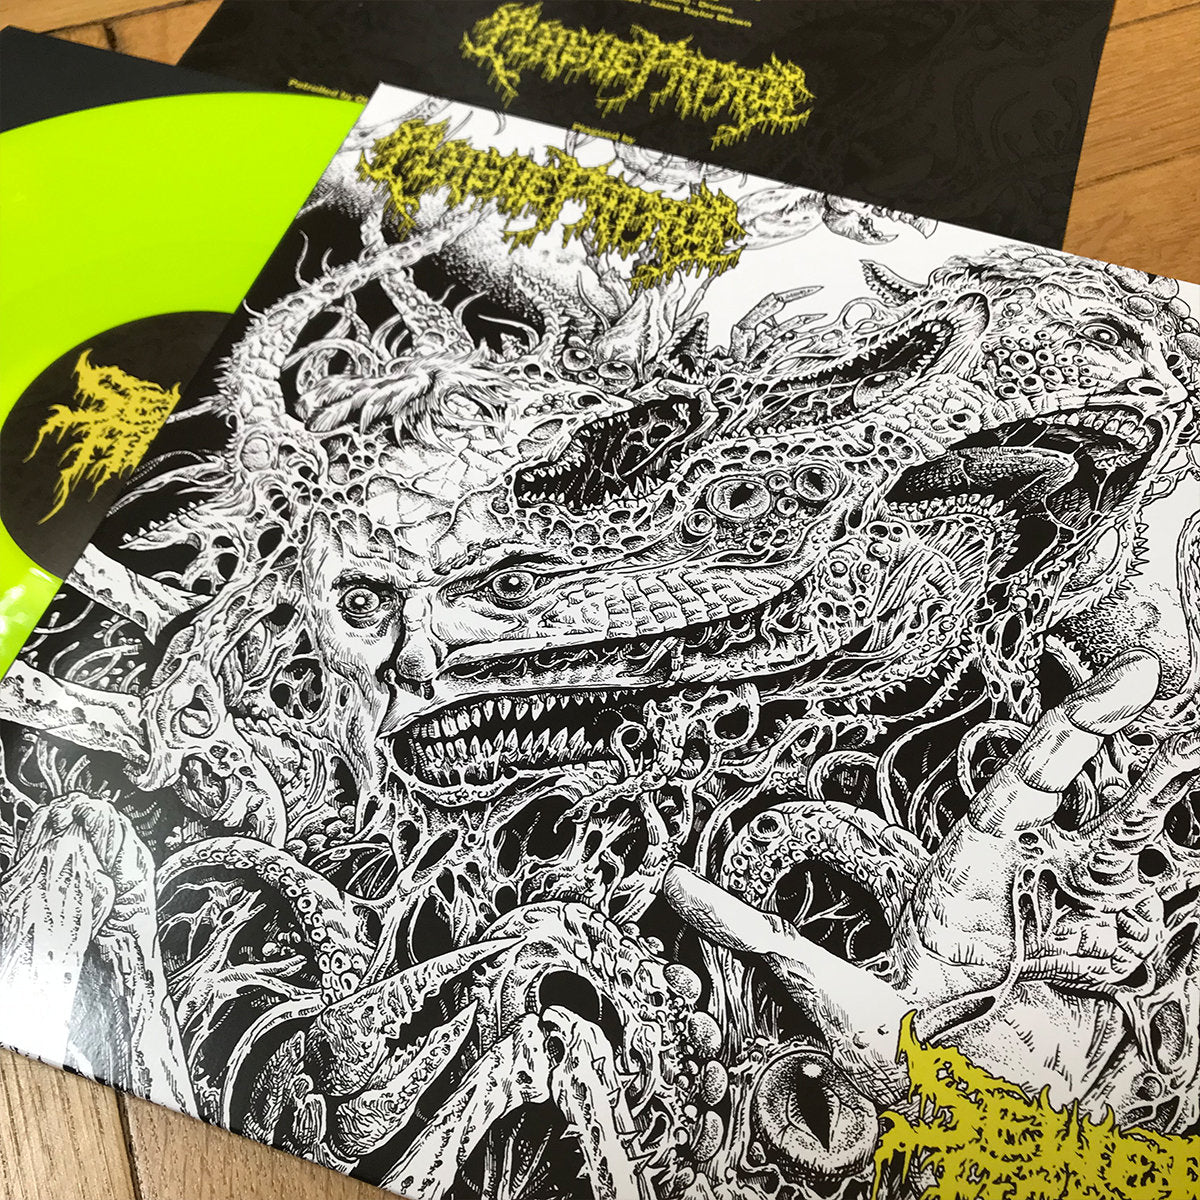 Plague Patrol / Sewer Fiend's Split LP 12" record death metal neon yellow vinyl